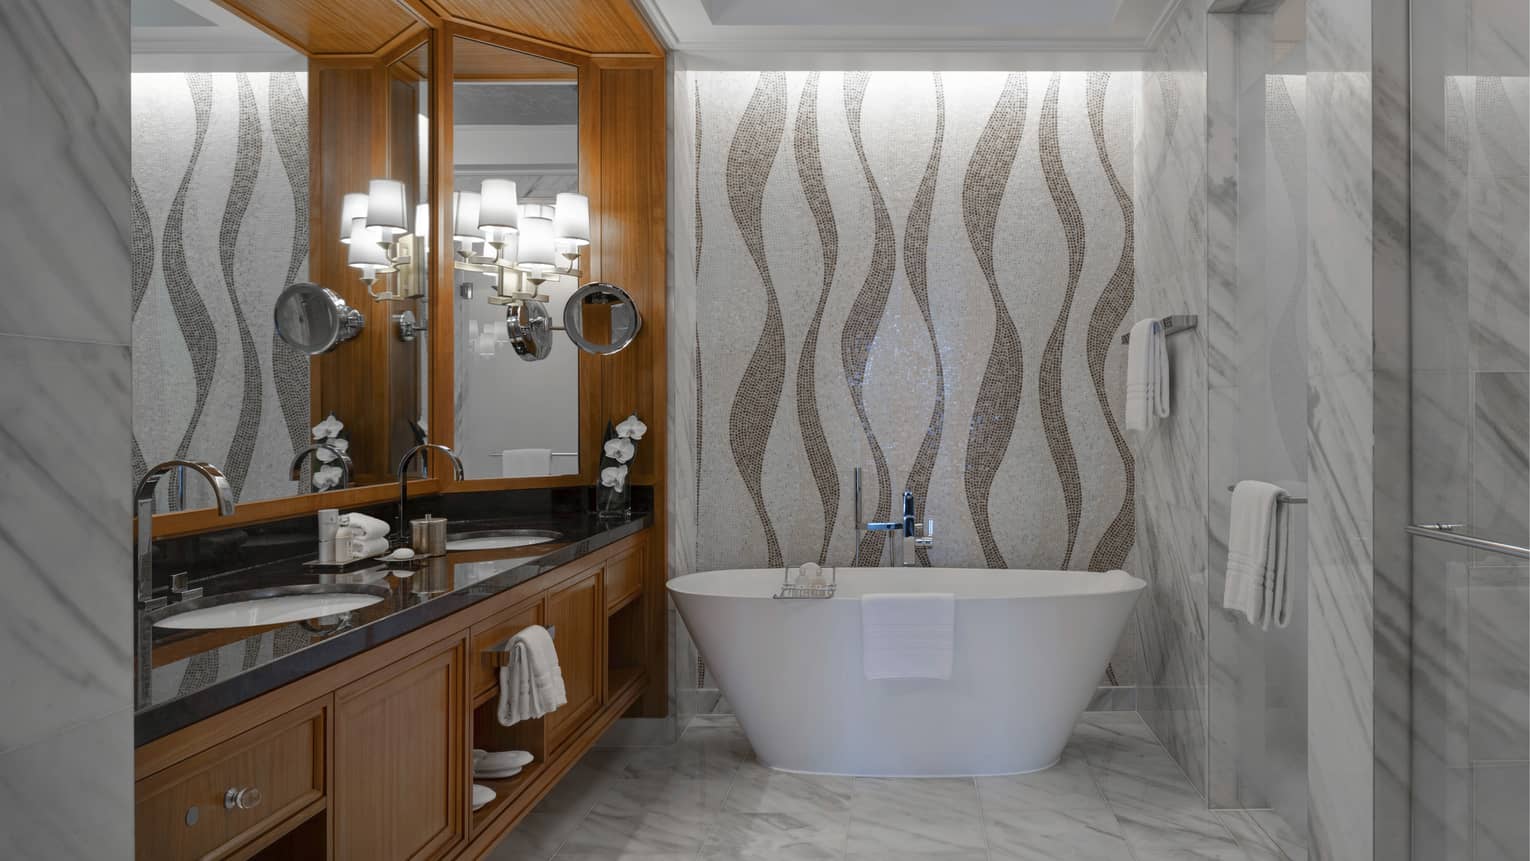 Bathroom with marble floors, mosaic tile wall, freestanding tub, wooden vanity